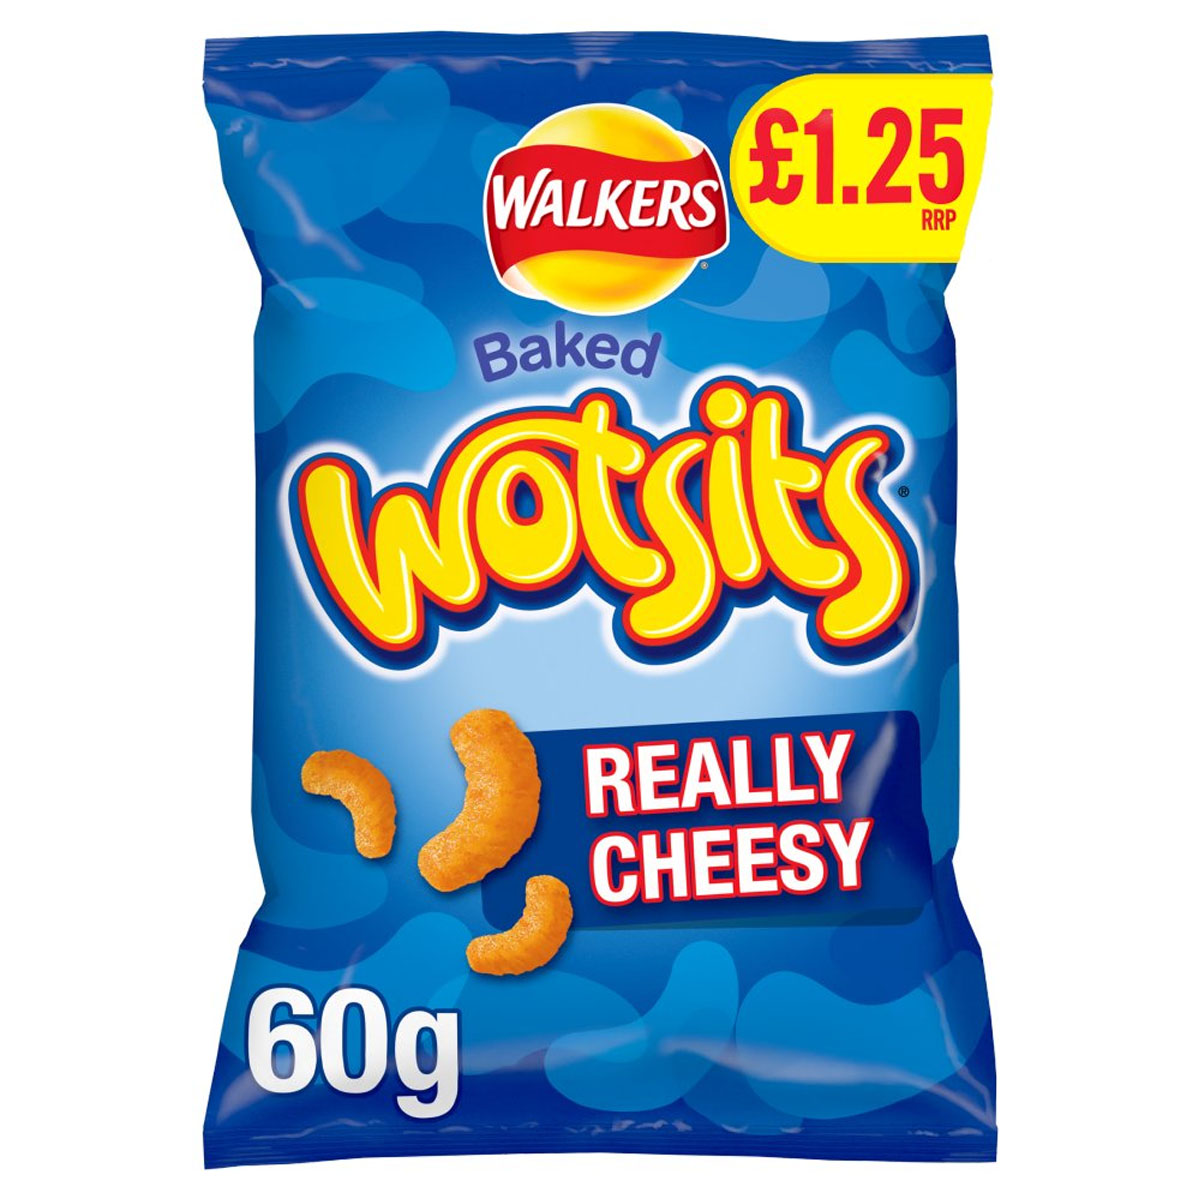 Walkers - Wotsits Really Cheesy - 60g are really cheesy chips.